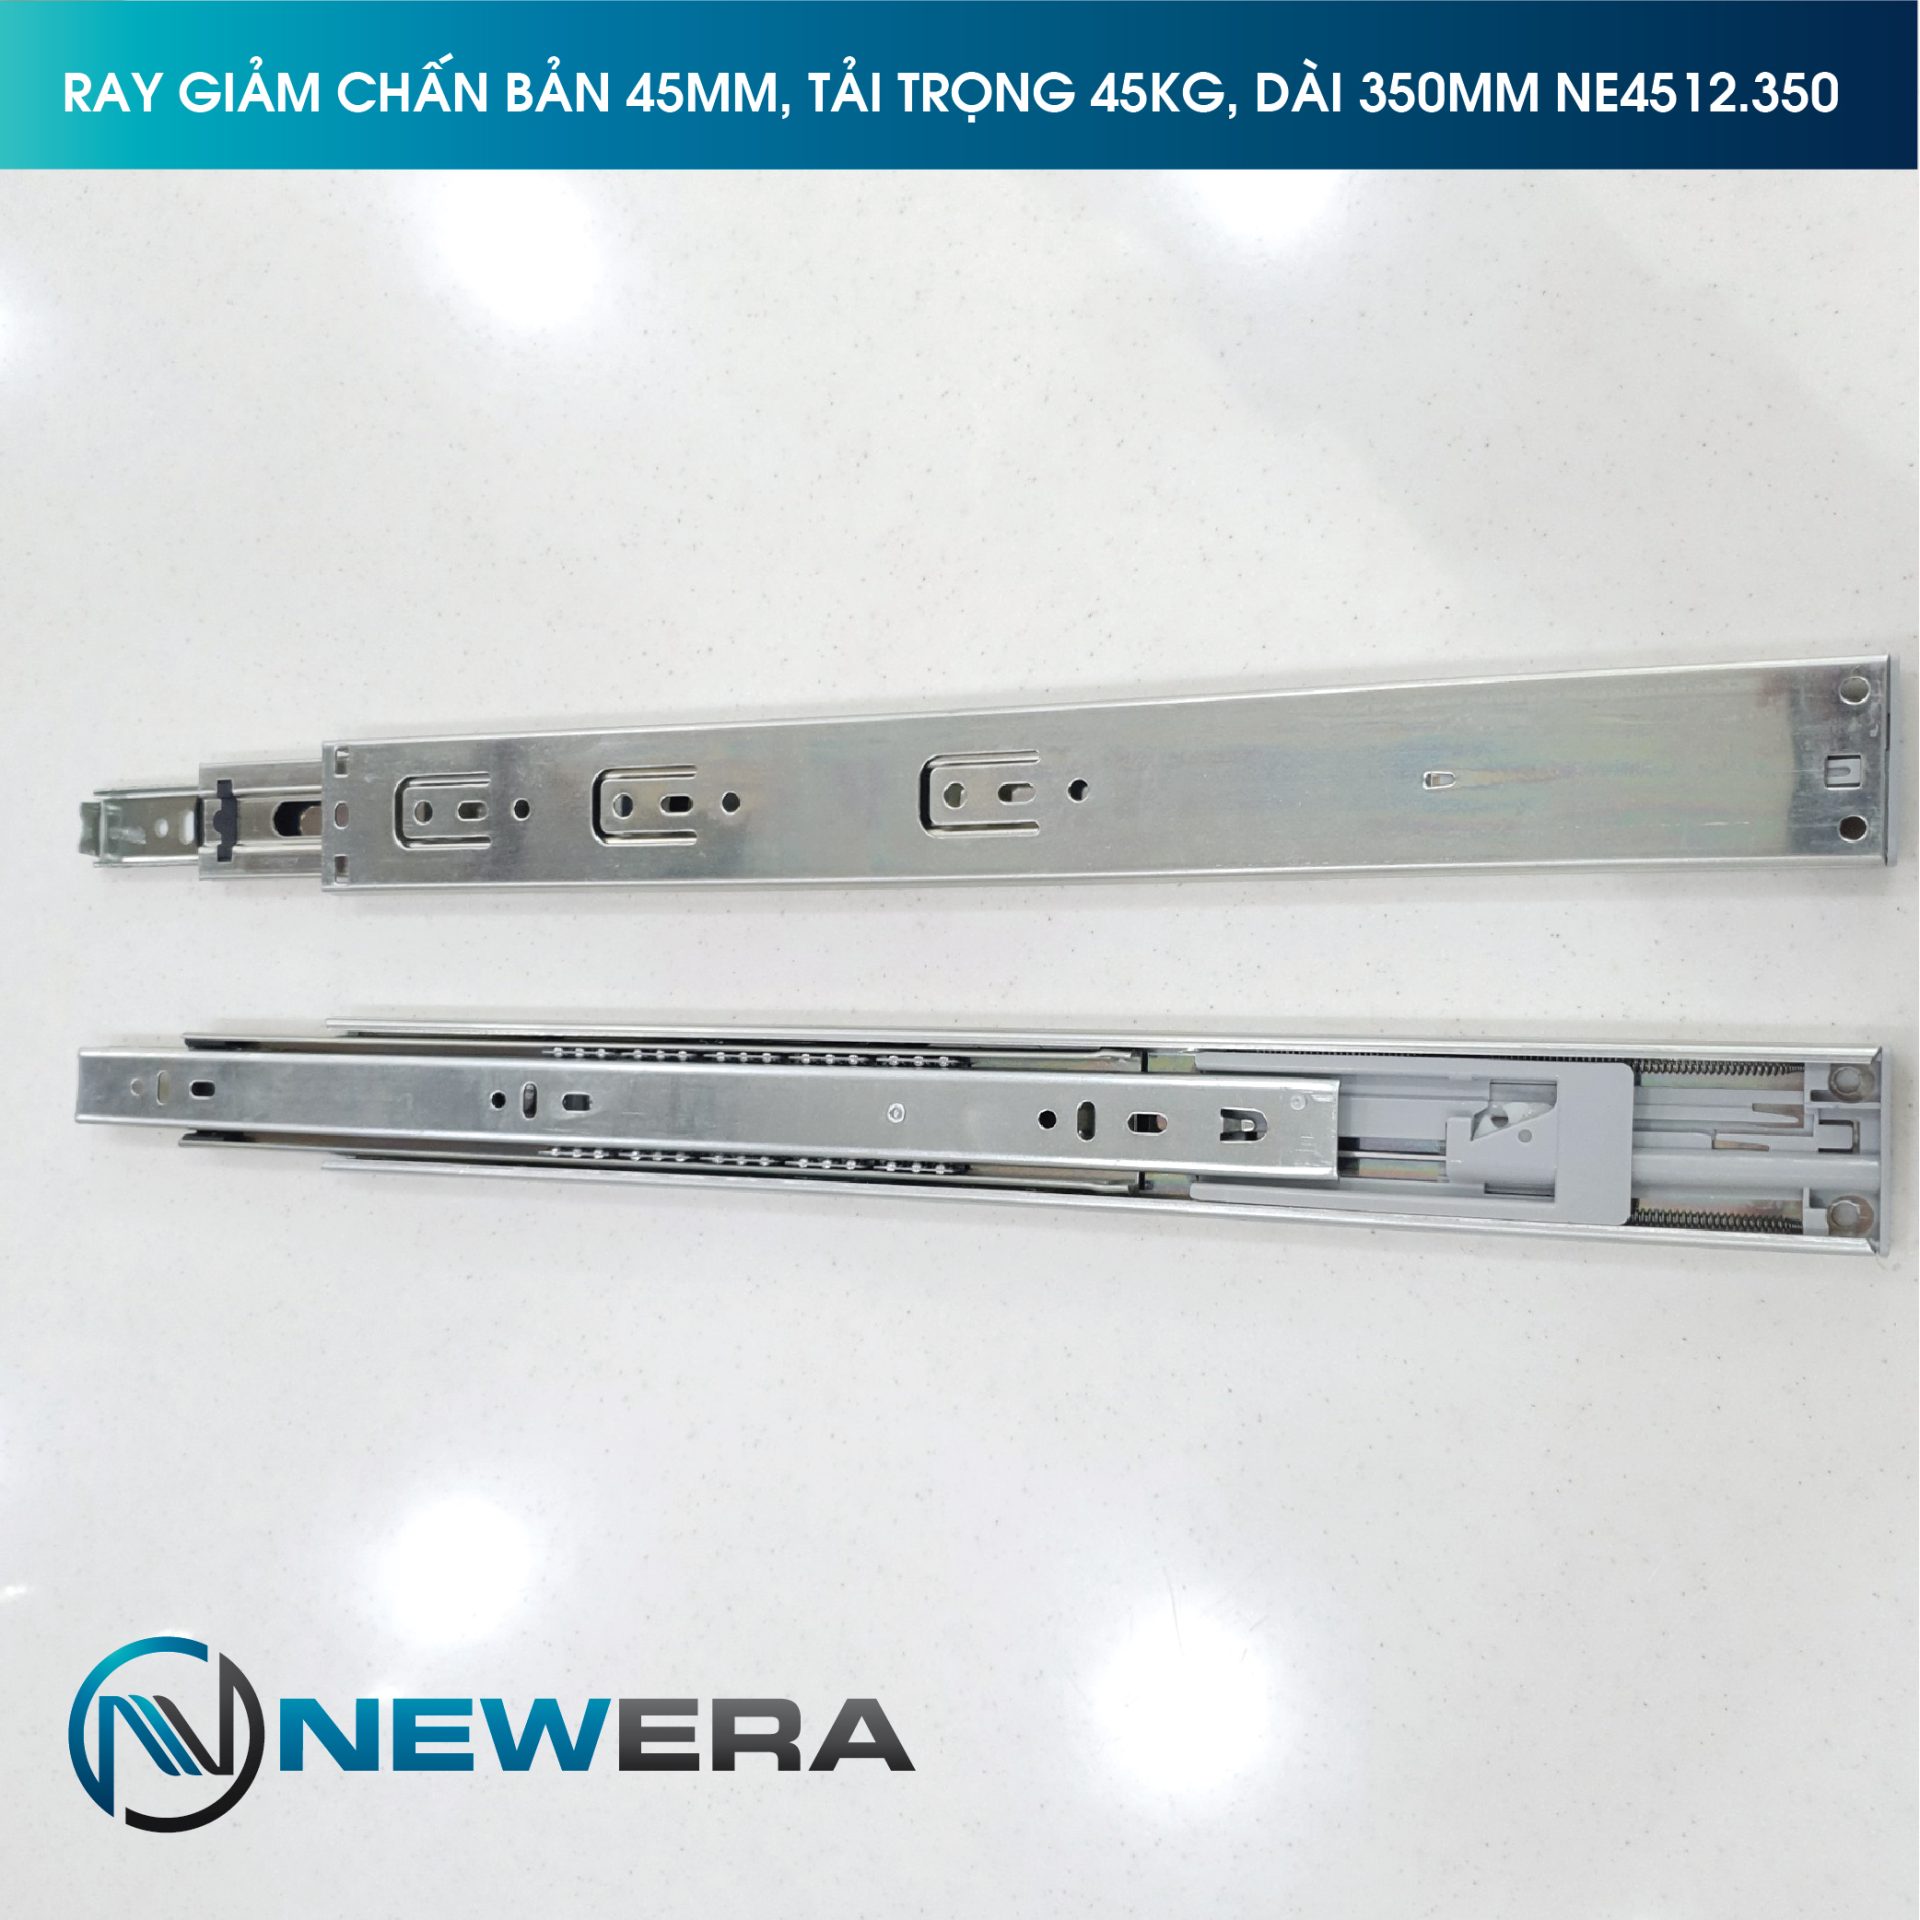 Ray bi giảm chấn NewEra 3 tầng, 350mm NE4512.350 1